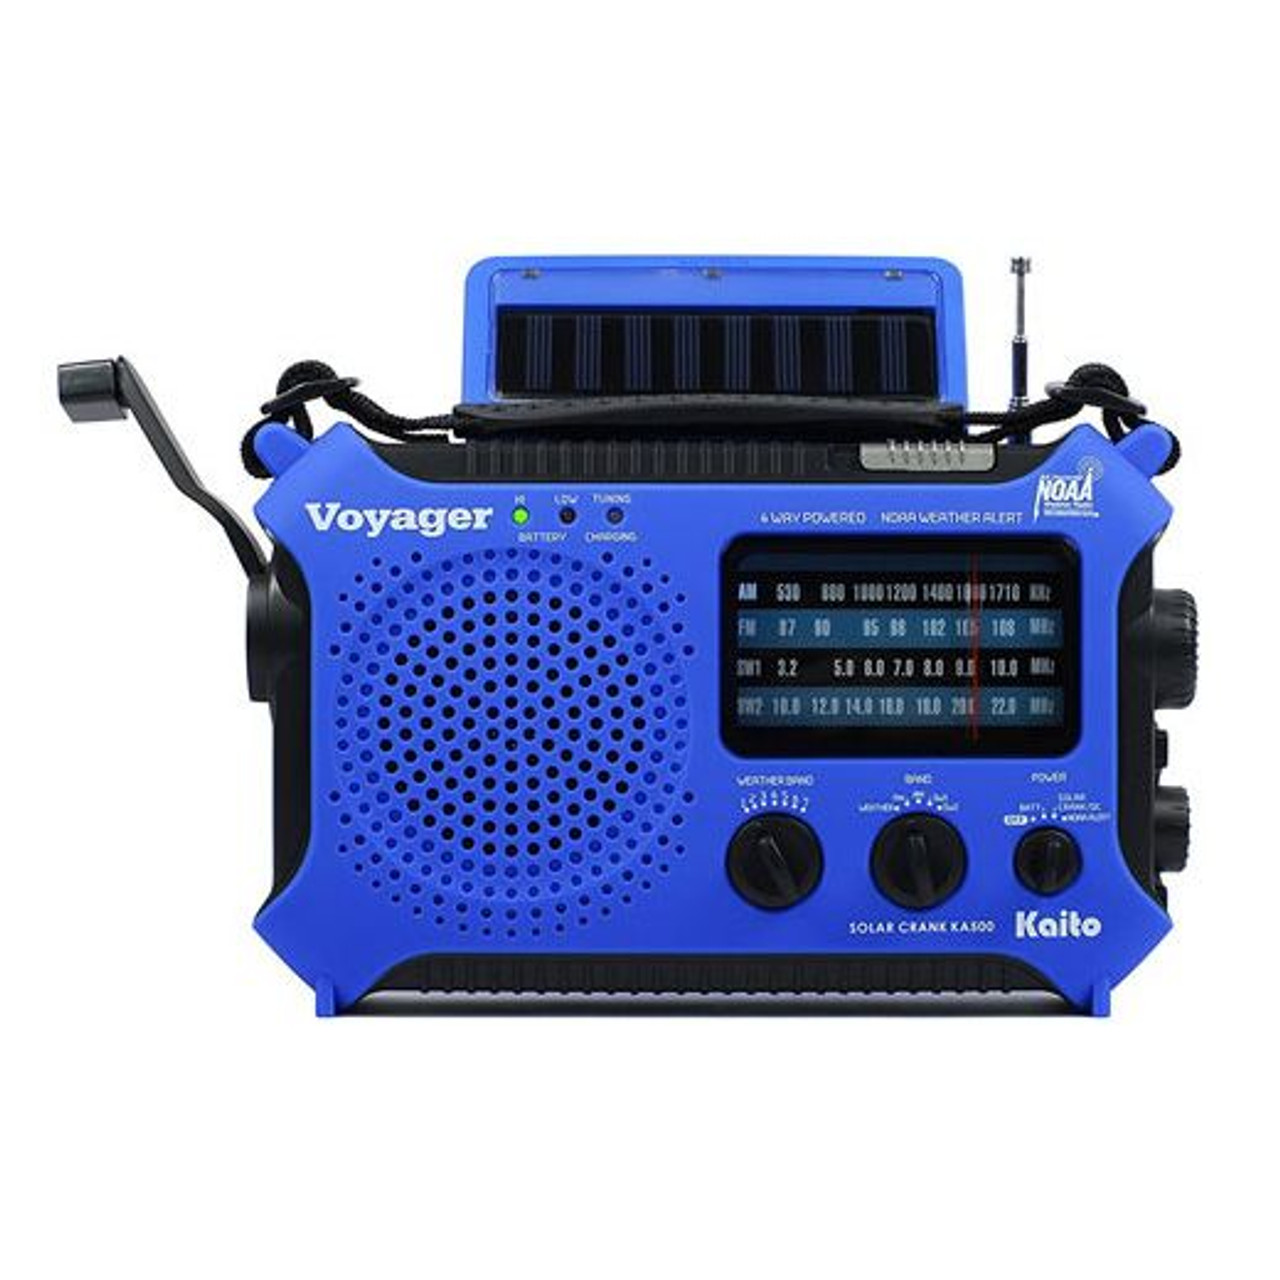 The Voyager - Crank, Solar Power AM/FM/SW NOAA Weather Alert Emergency Radio  - Emergency Radios Walkie Talkies